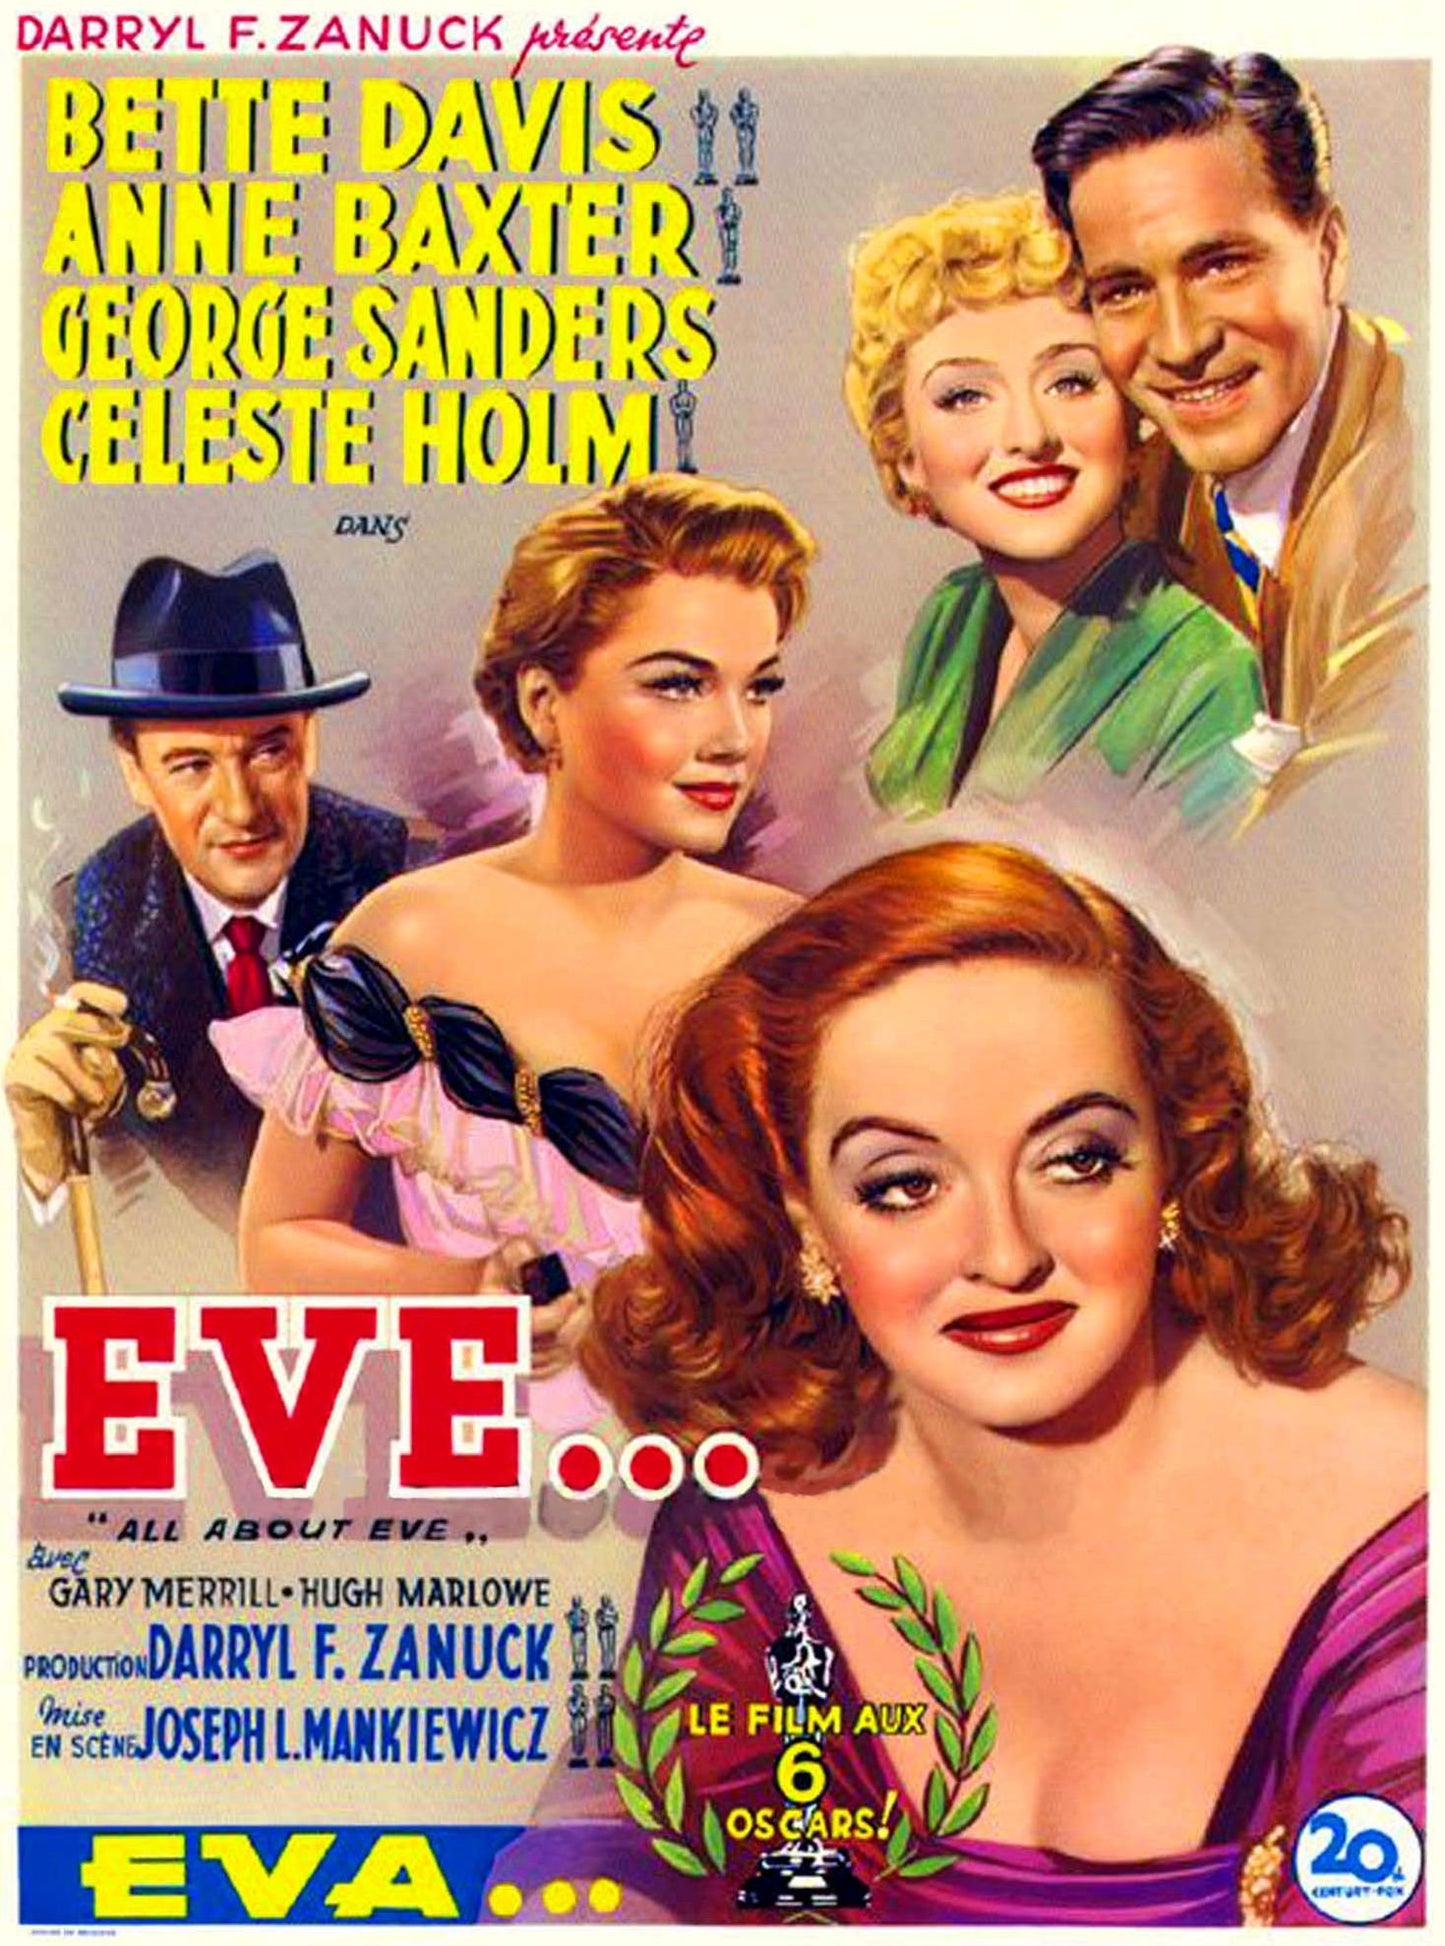 Eve --Vintage movie poster  (797)